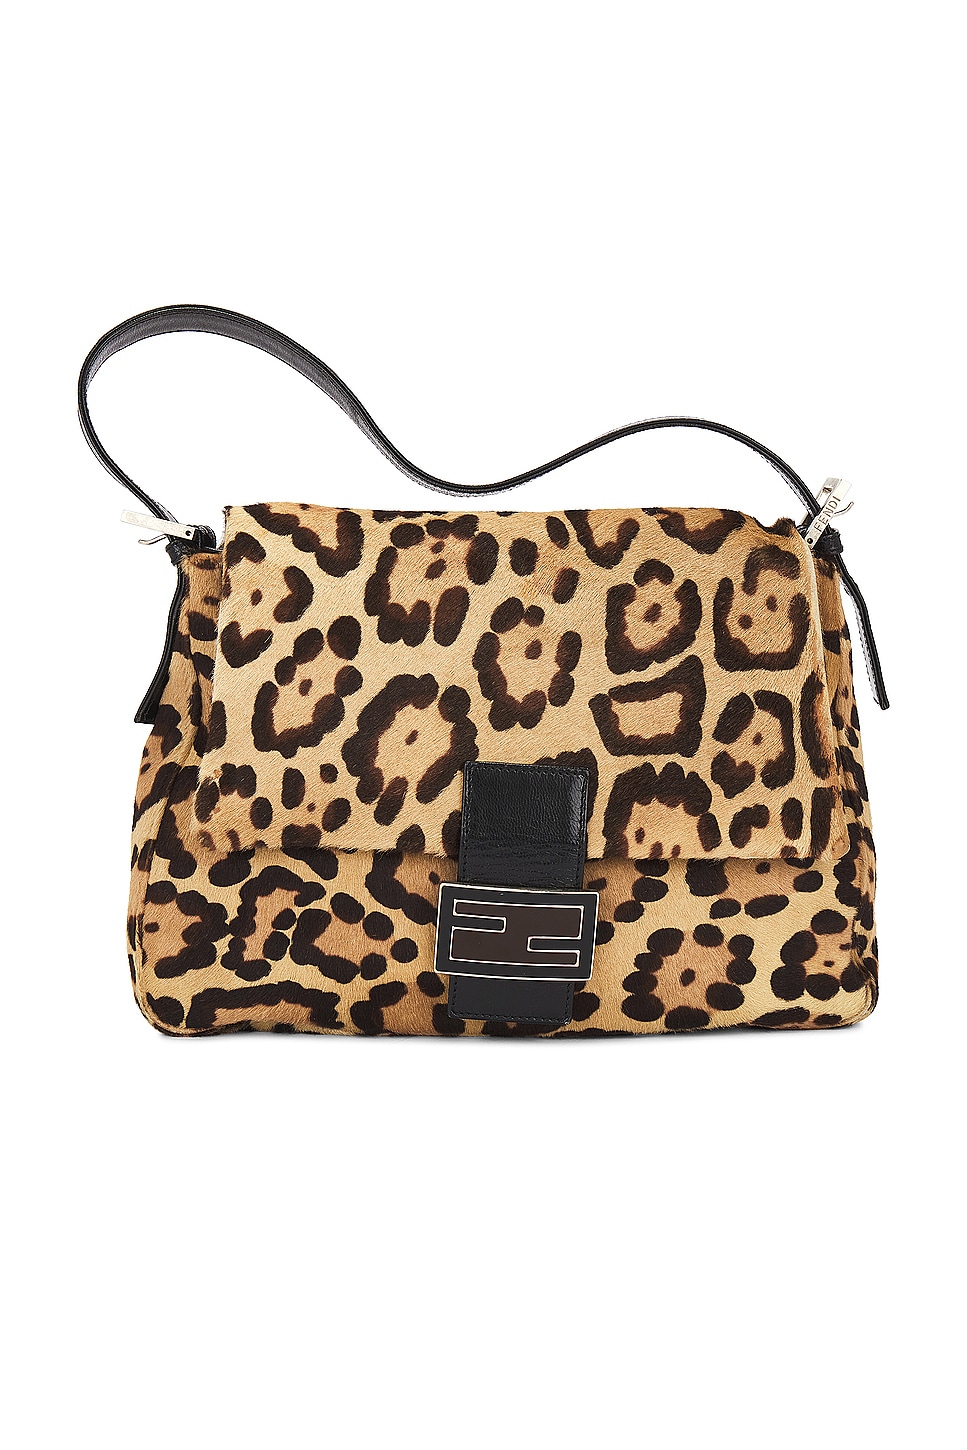 FWRD Renew Fendi Leopard Mama Baguette Shoulder Bag in Tan | REVOLVE